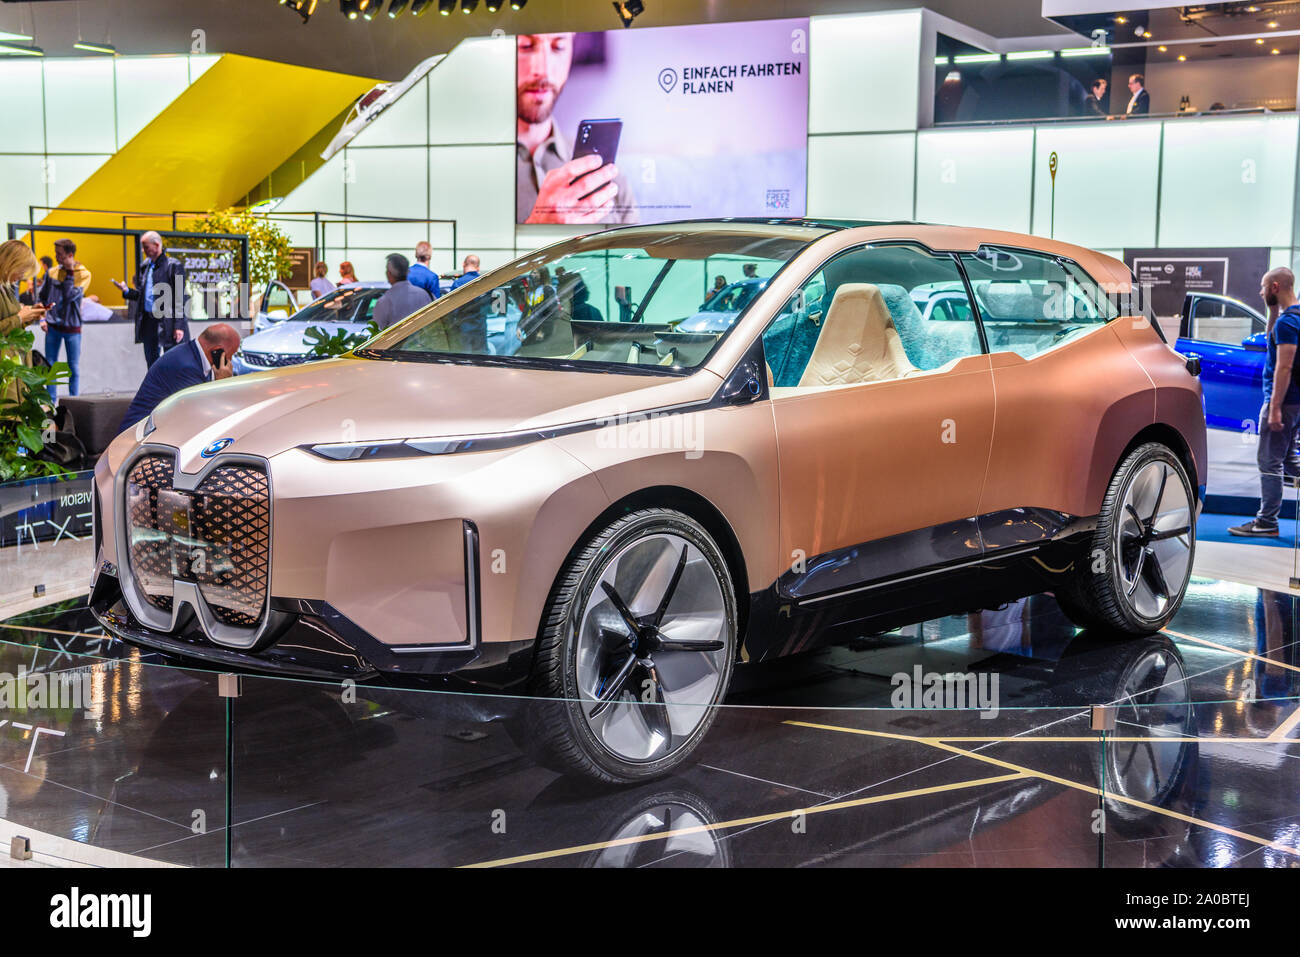 https://c8.alamy.com/comp/2A0BTEJ/frankfurt-germany-sept-2019-pink-sand-bmw-inext-concept-electric-car-iaa-international-motor-show-auto-exhibtion-2A0BTEJ.jpg